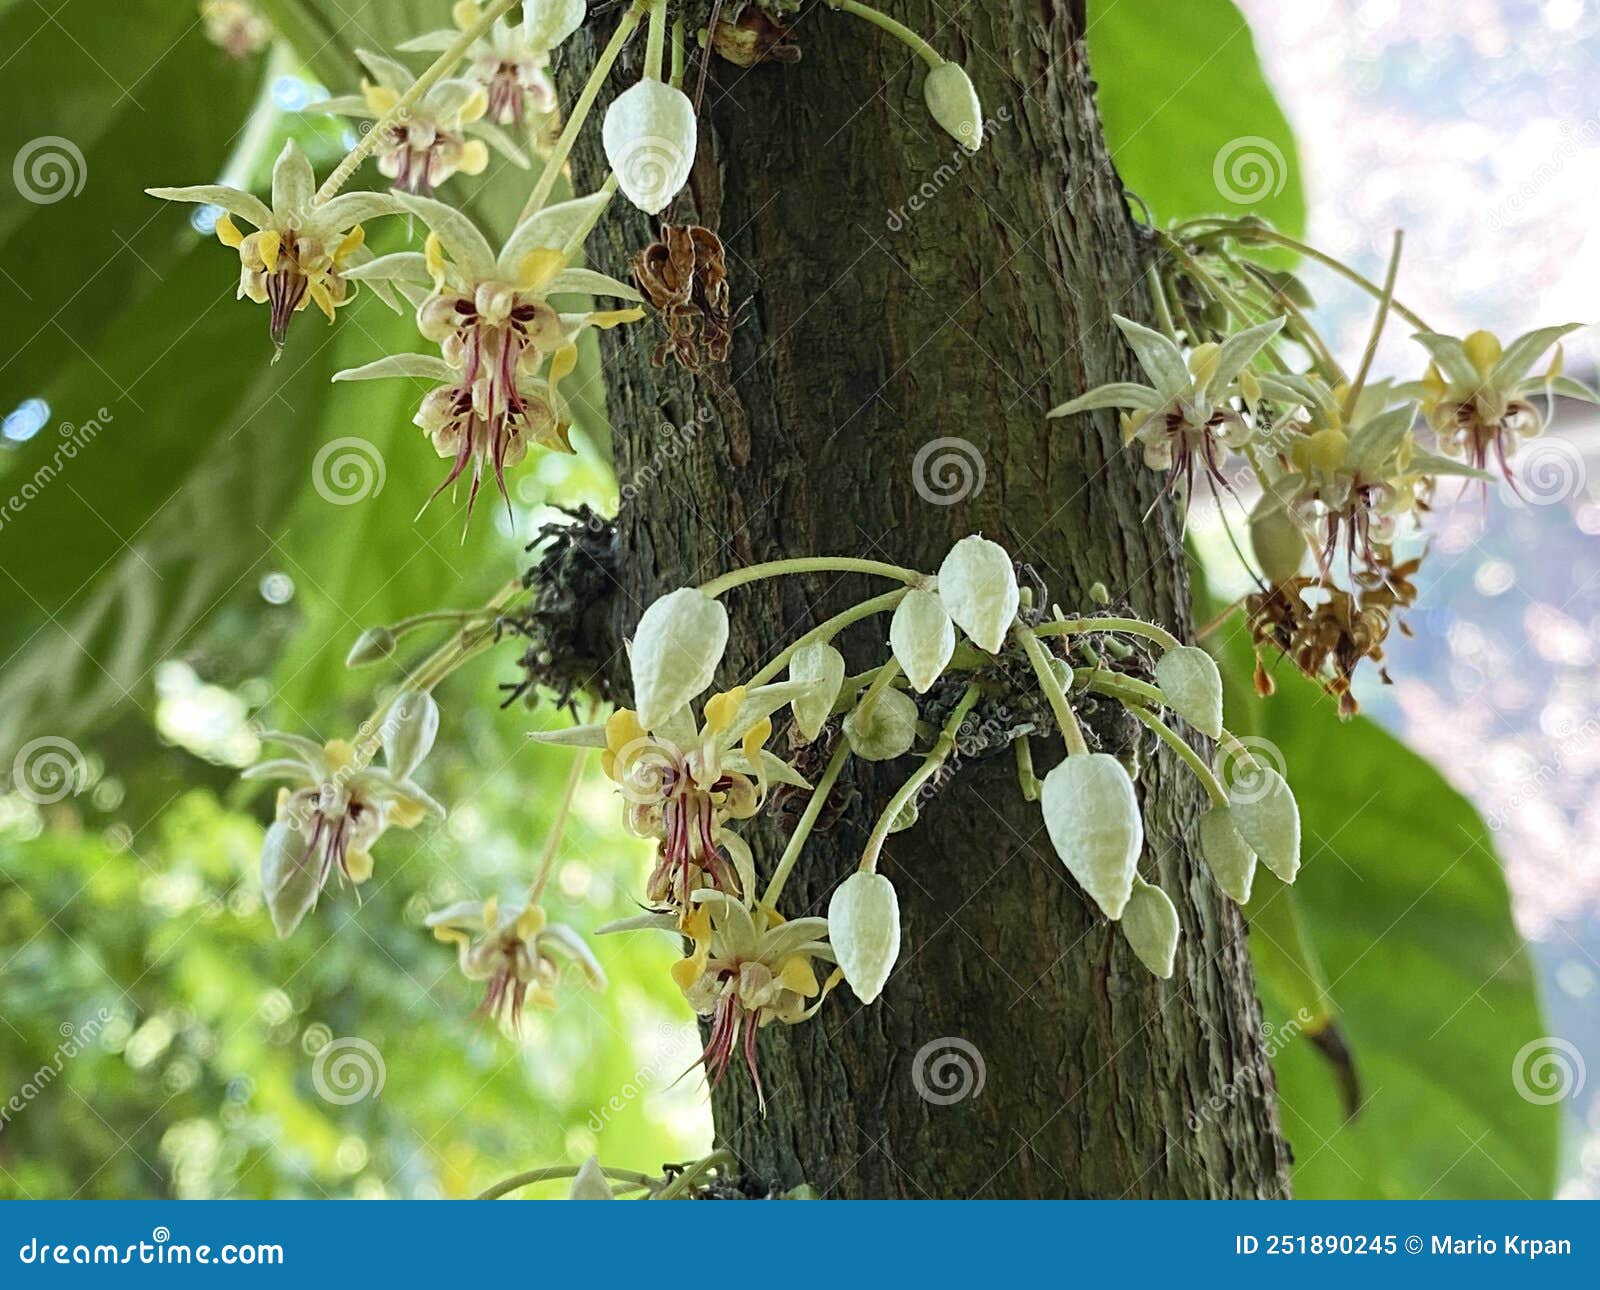 cacao tree / theobroma cacao / cocoa tree, kakaobaum, ÃÂ¡rbol del cacao, kakao-baum, cacaotero, cacaotier, cacaoyer